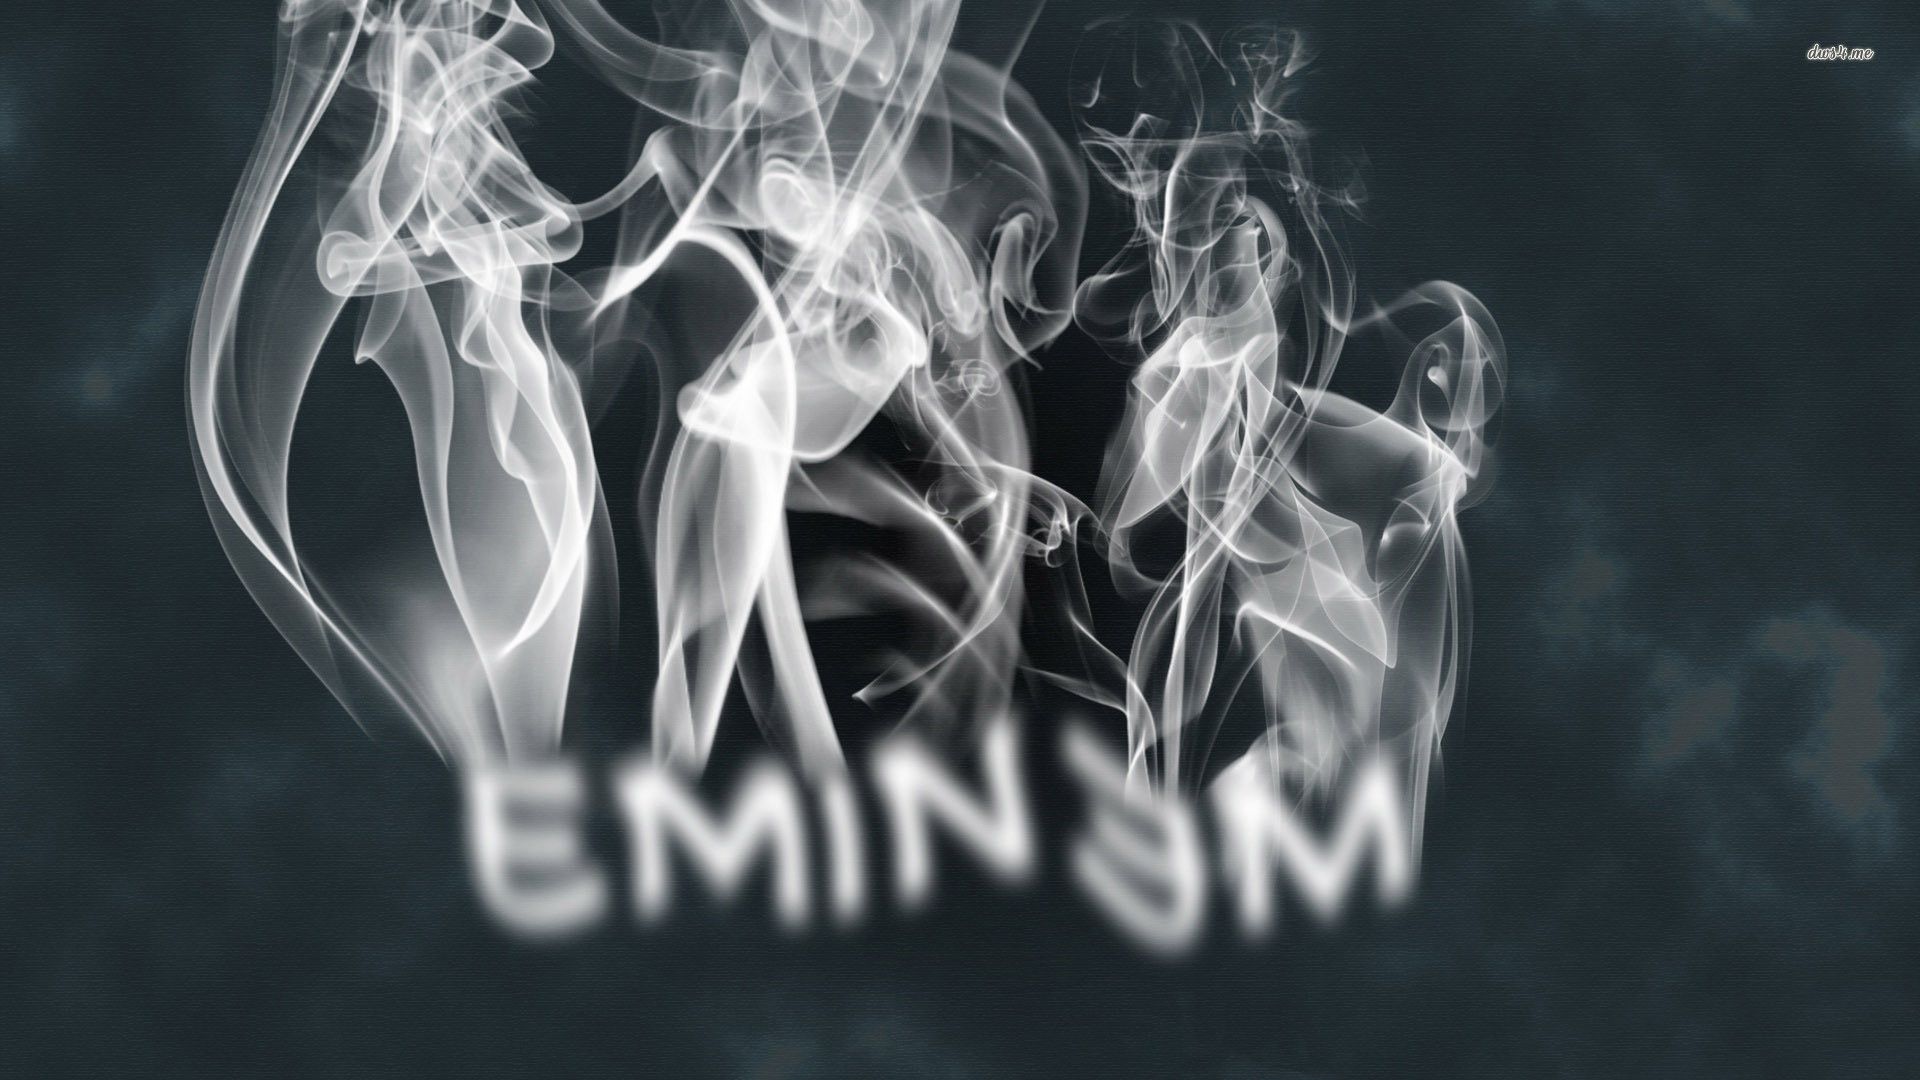 Eminem Wallpaper Kb